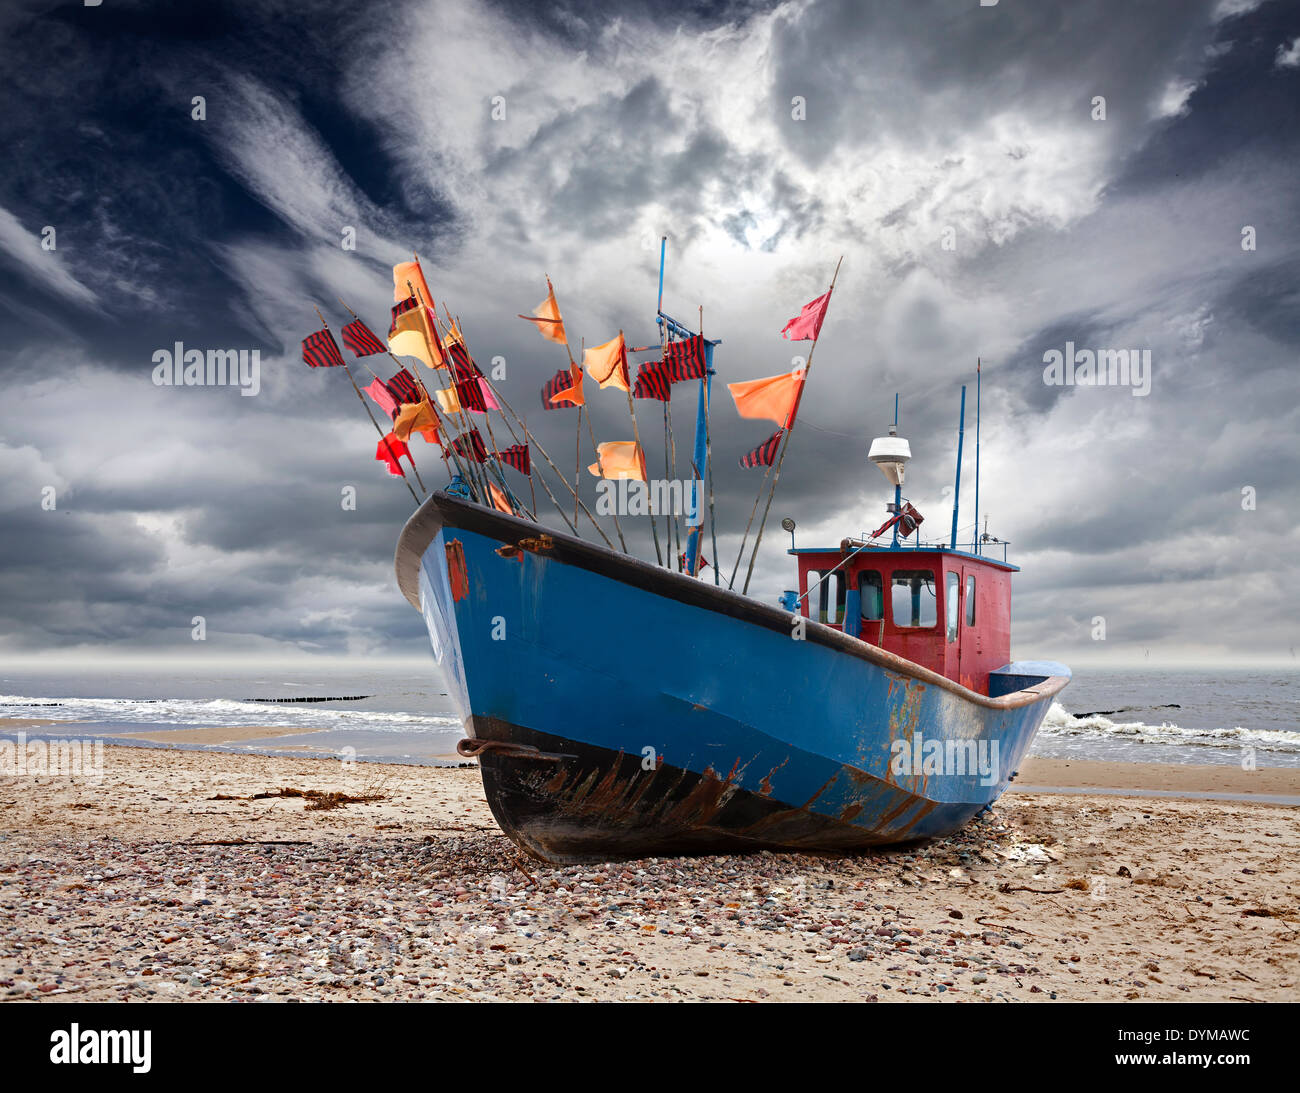 Boat on the beach, stormy sky in Miedzyzdroje, Poland. Stock Photo